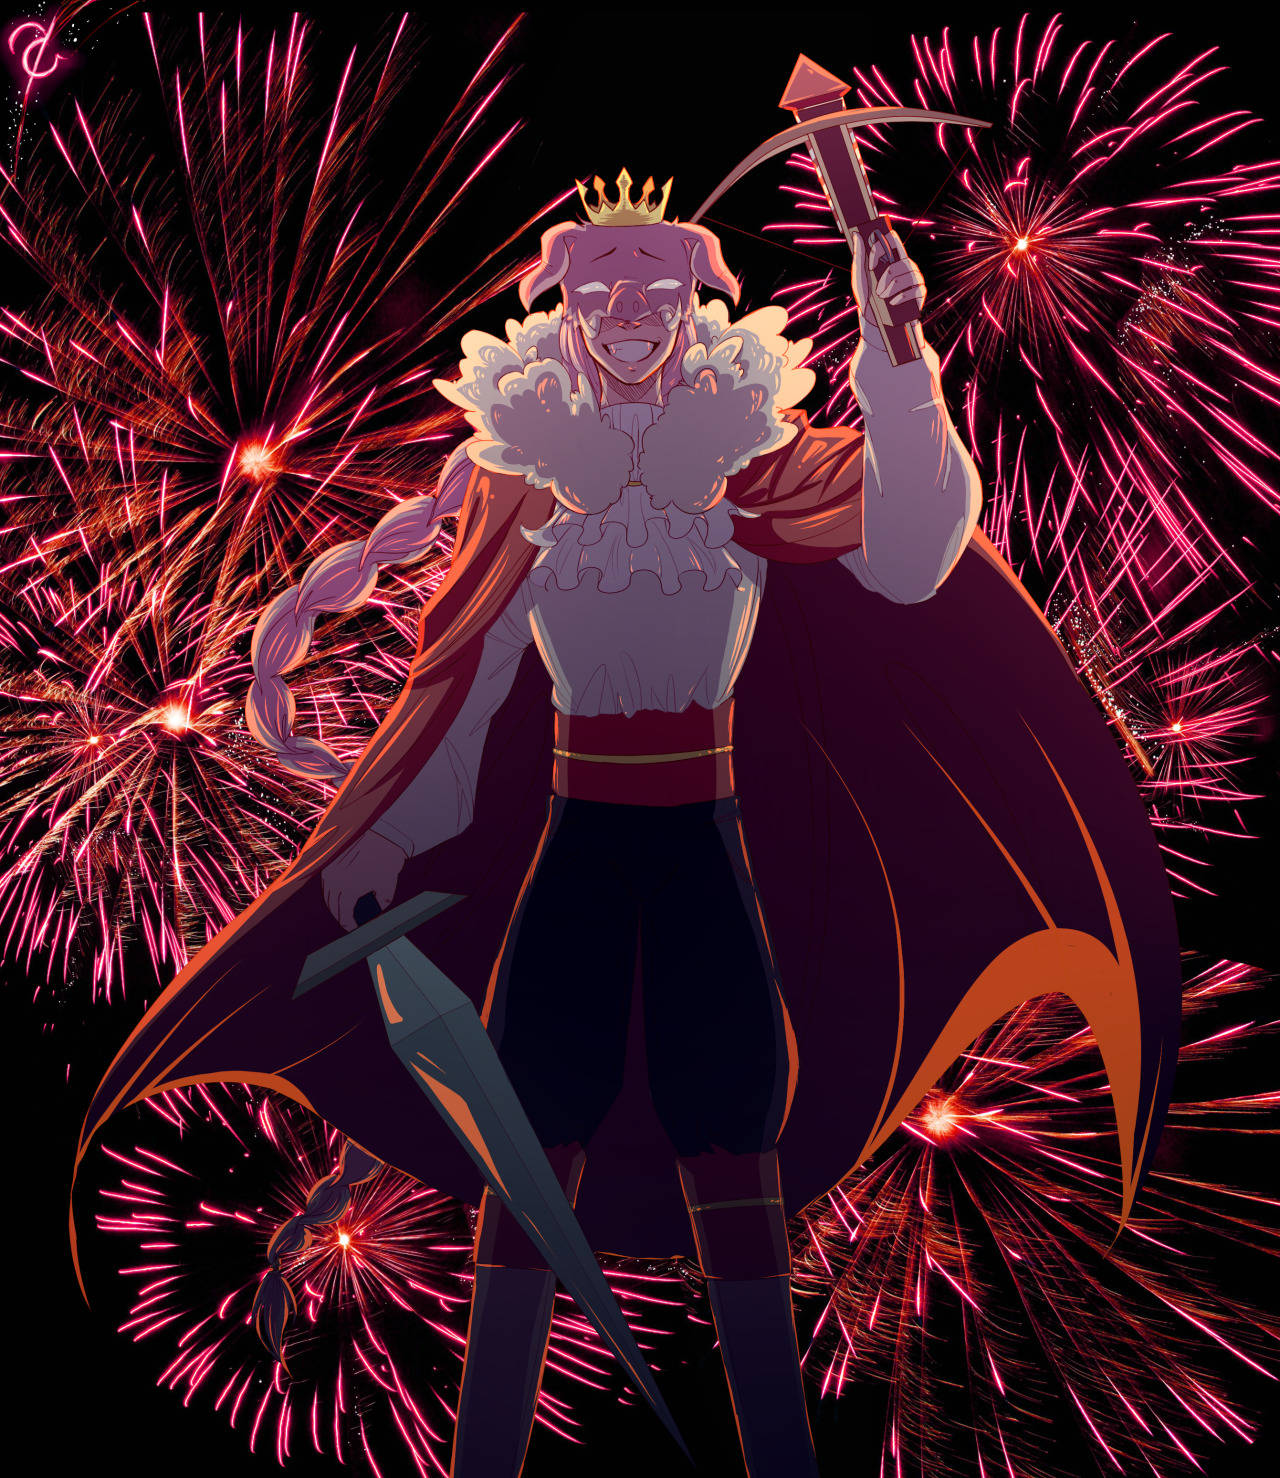 Anime Technoblade Under Fireworks